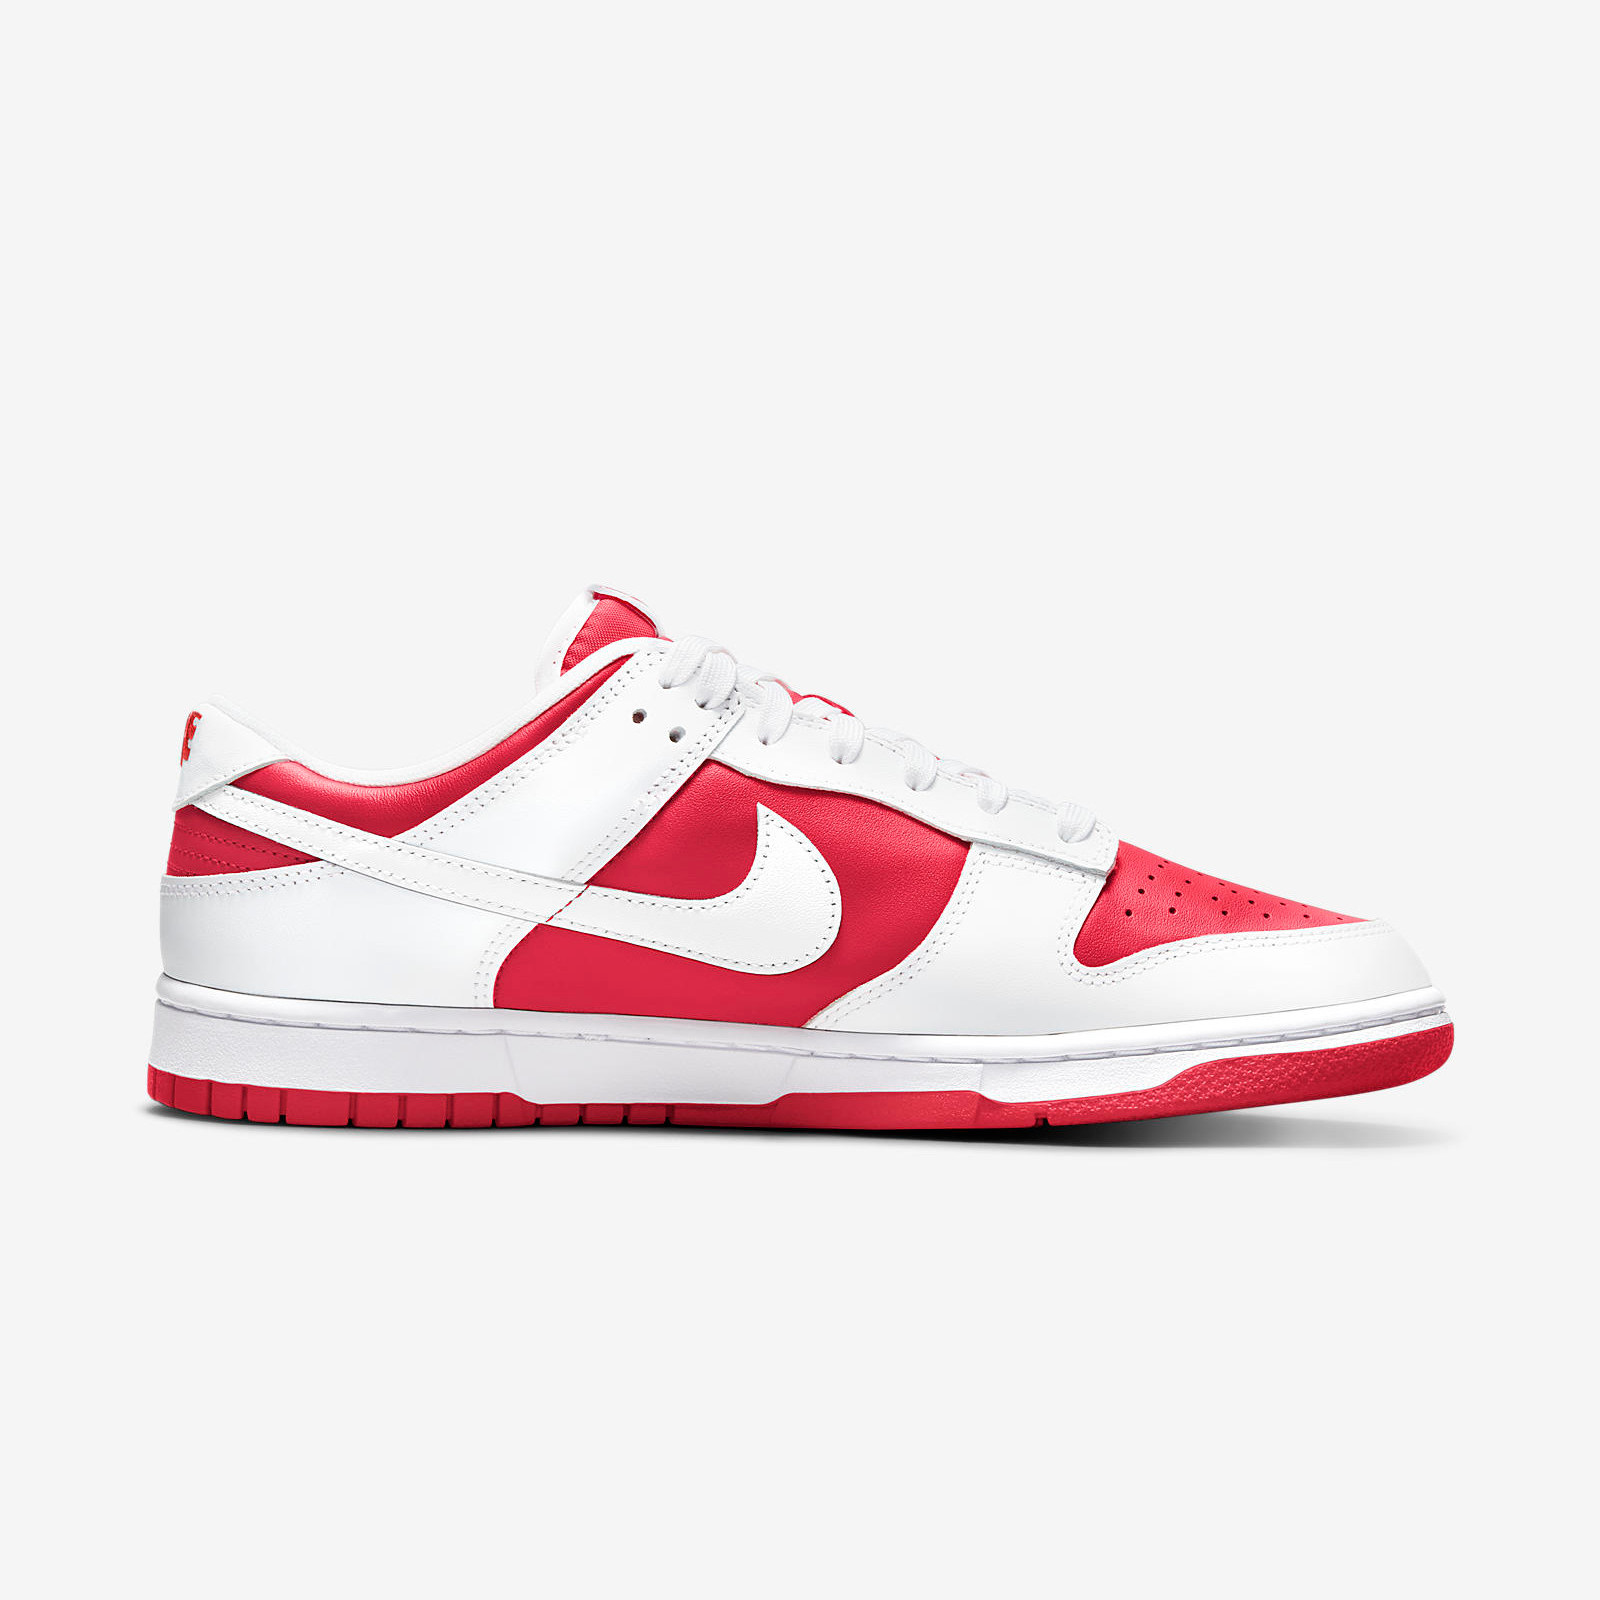 Nike Dunk Low Retro
Red / White